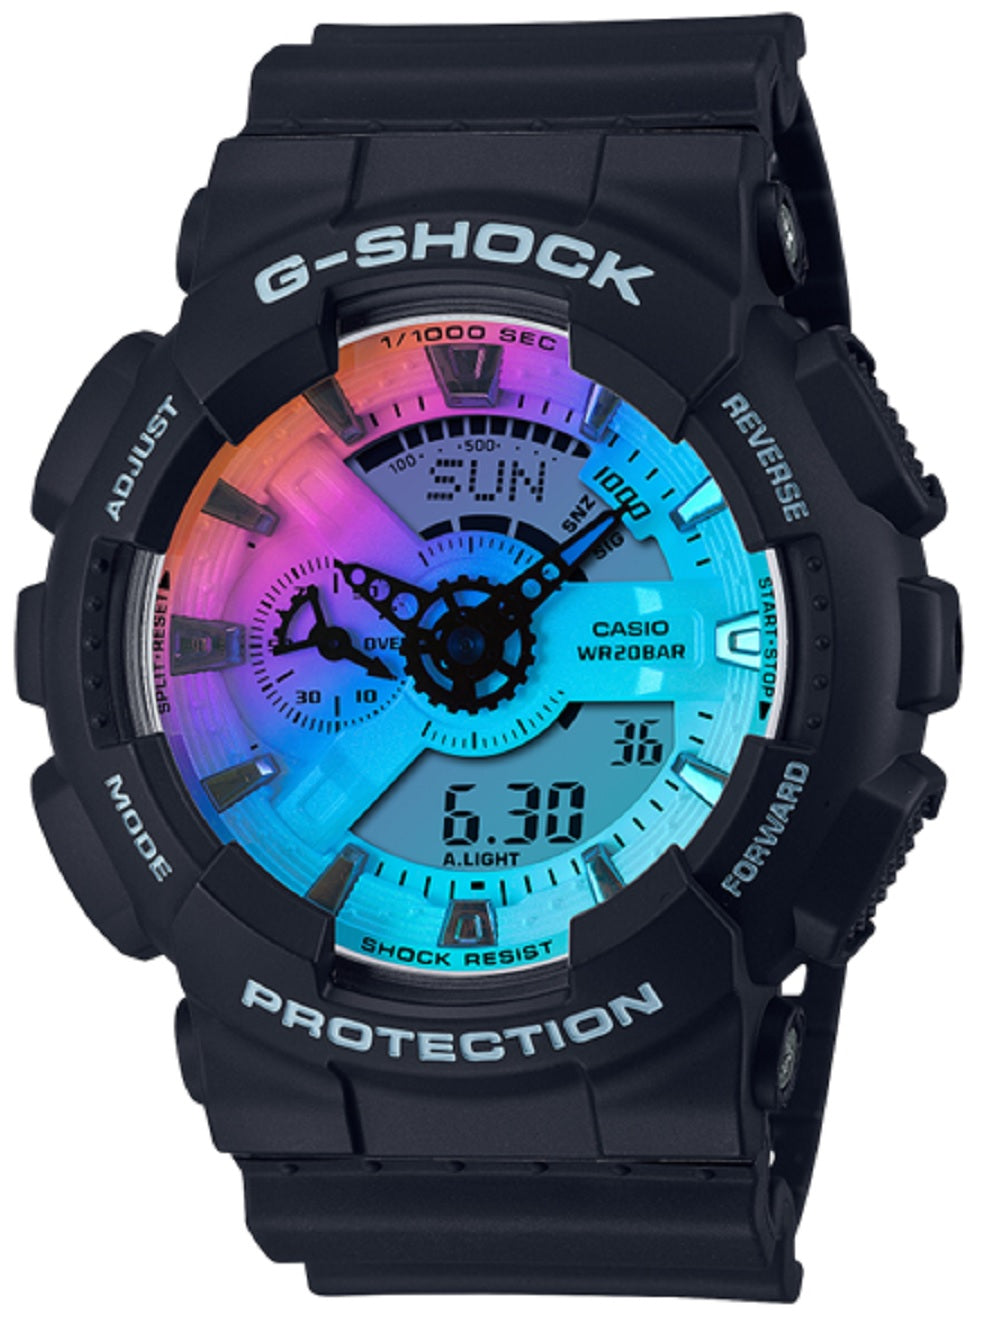 Casio G-shock GA-110SR-1A Digital Analog Rubber Strap Watch For Men-Watch Portal Philippines